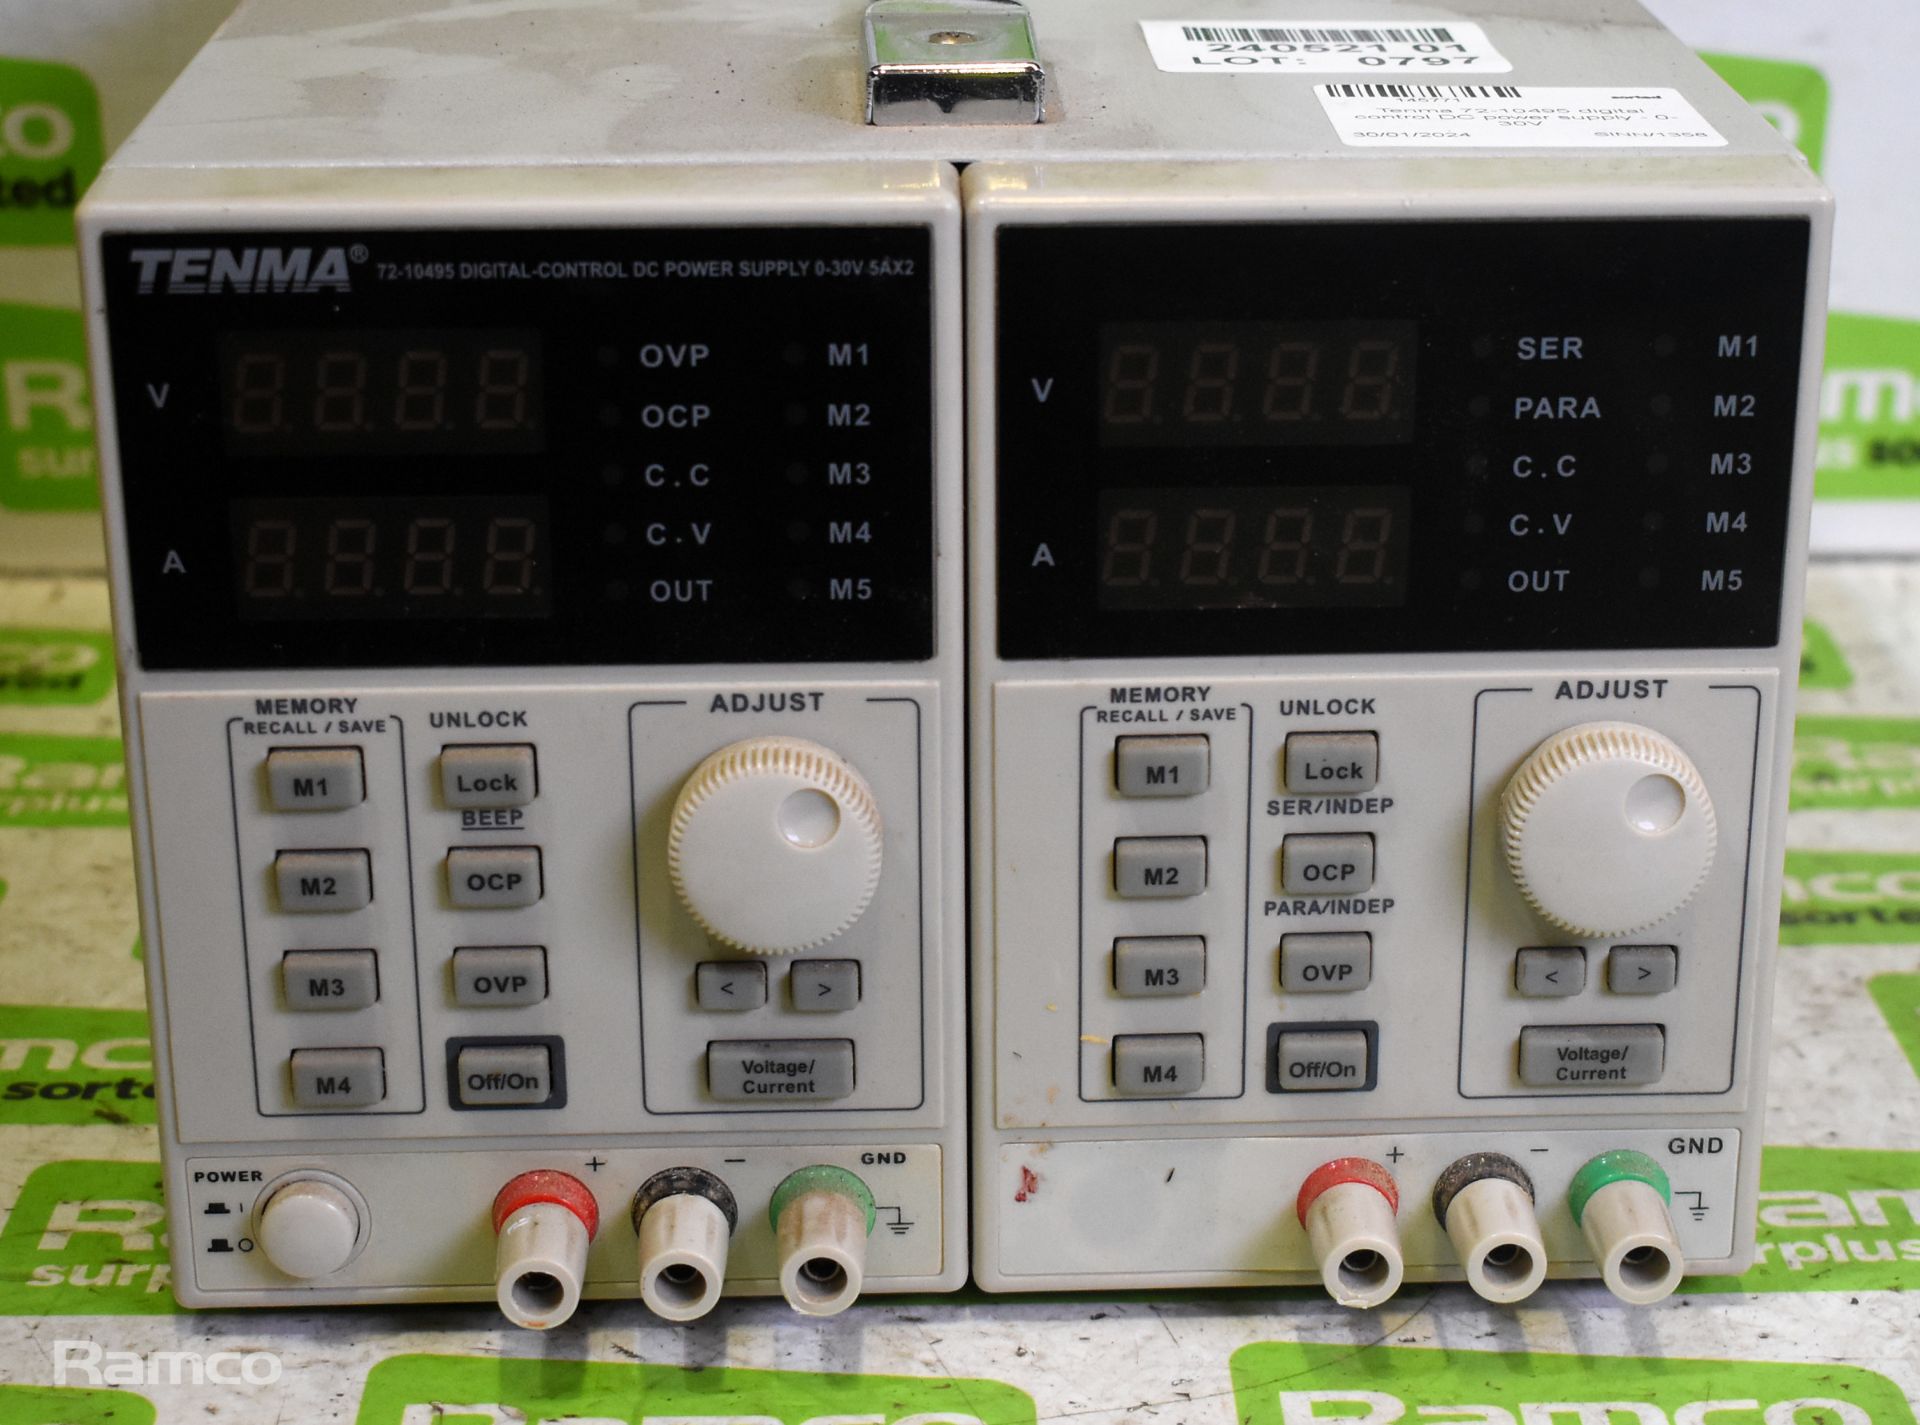 Tenma 72-10495 digital control DC power supply - 0-30V - Image 2 of 5